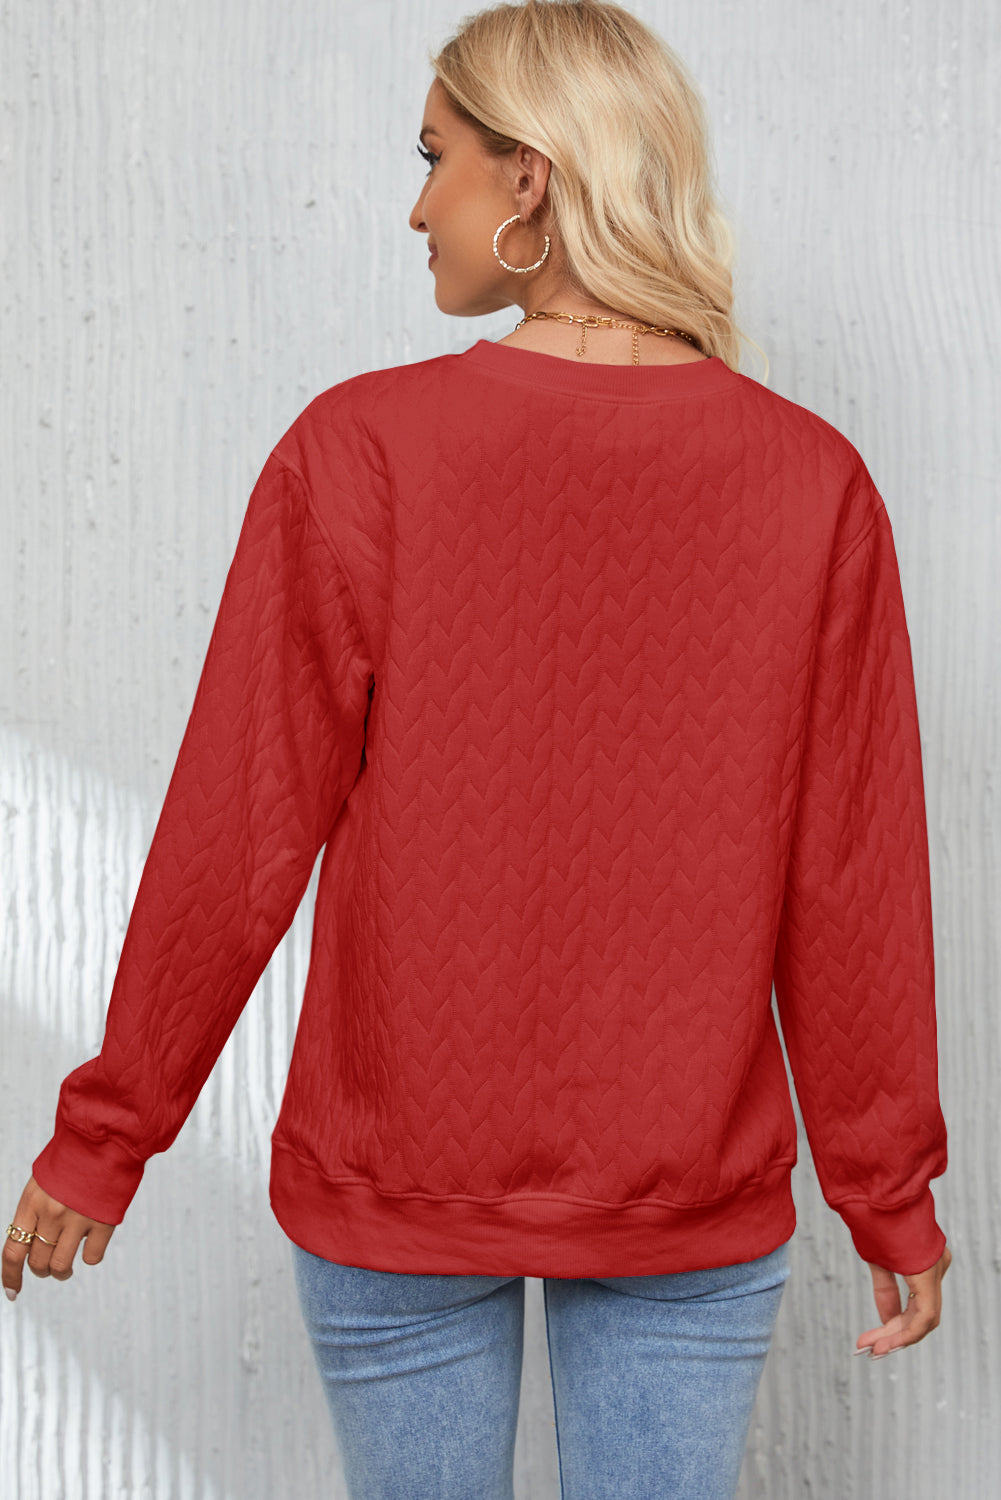 Sweat-shirt texturé brodé Racing Red Heart XOXO Chenille